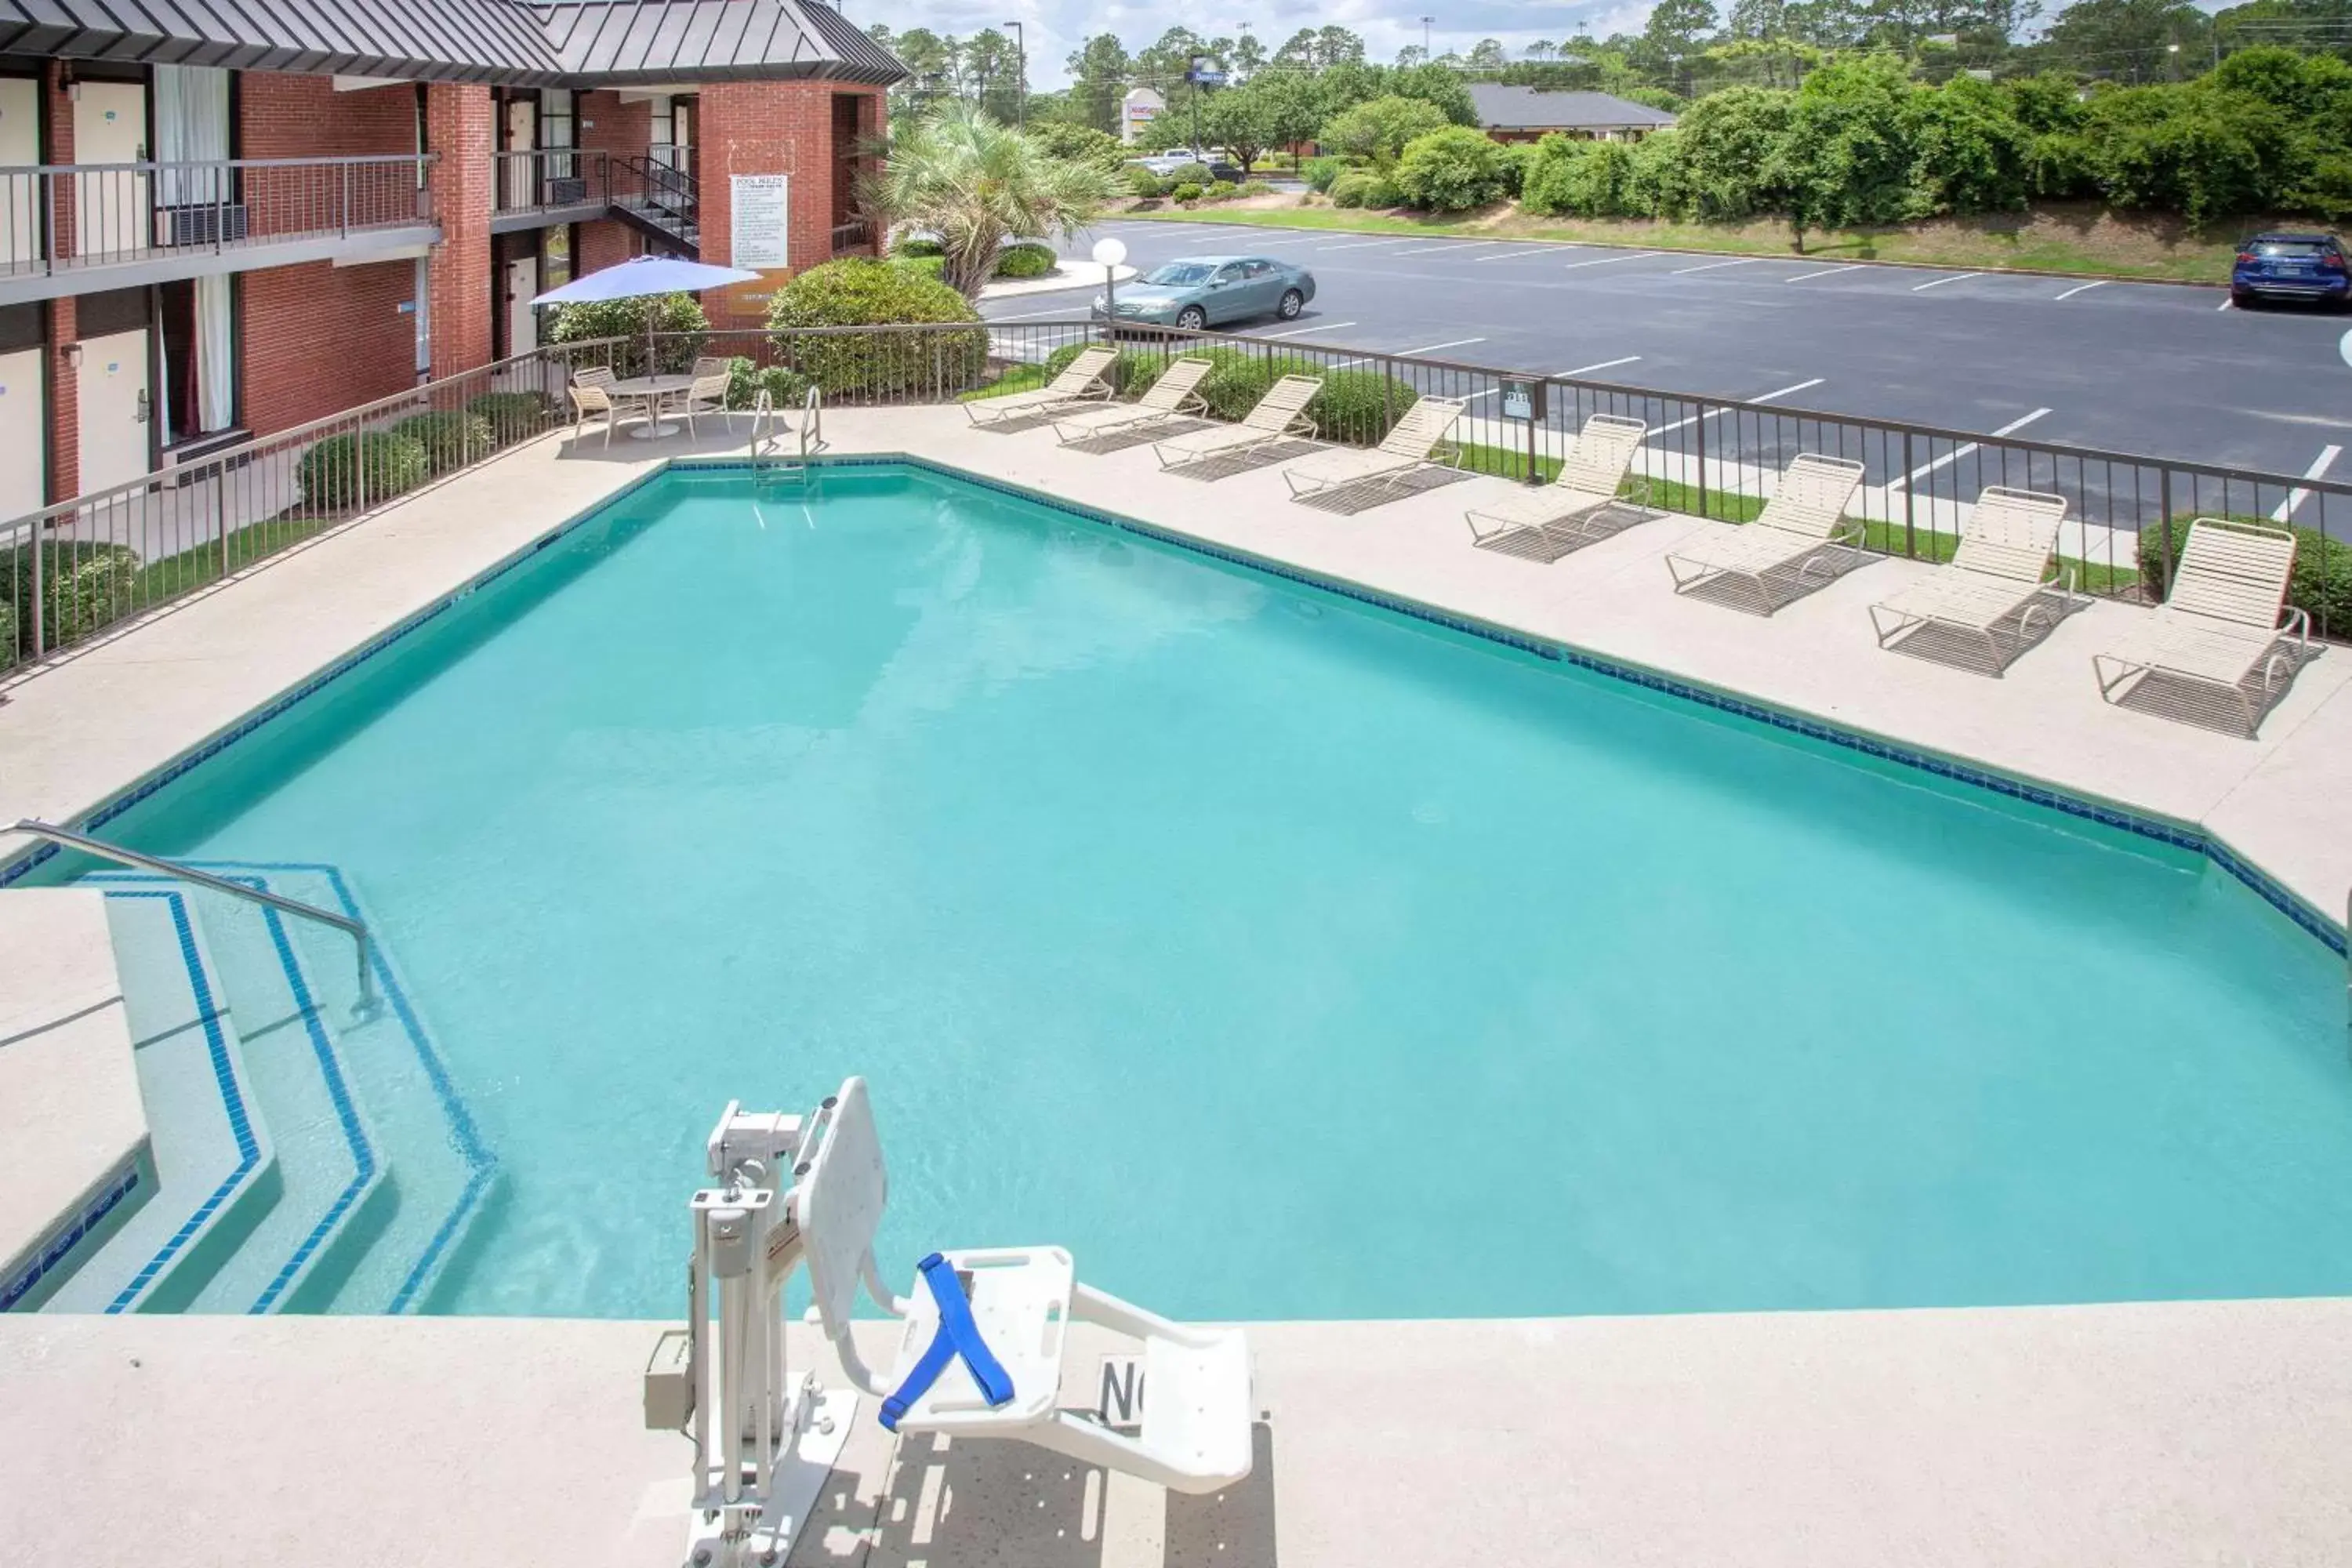 On site, Pool View in Days Inn by Wyndham Statesboro